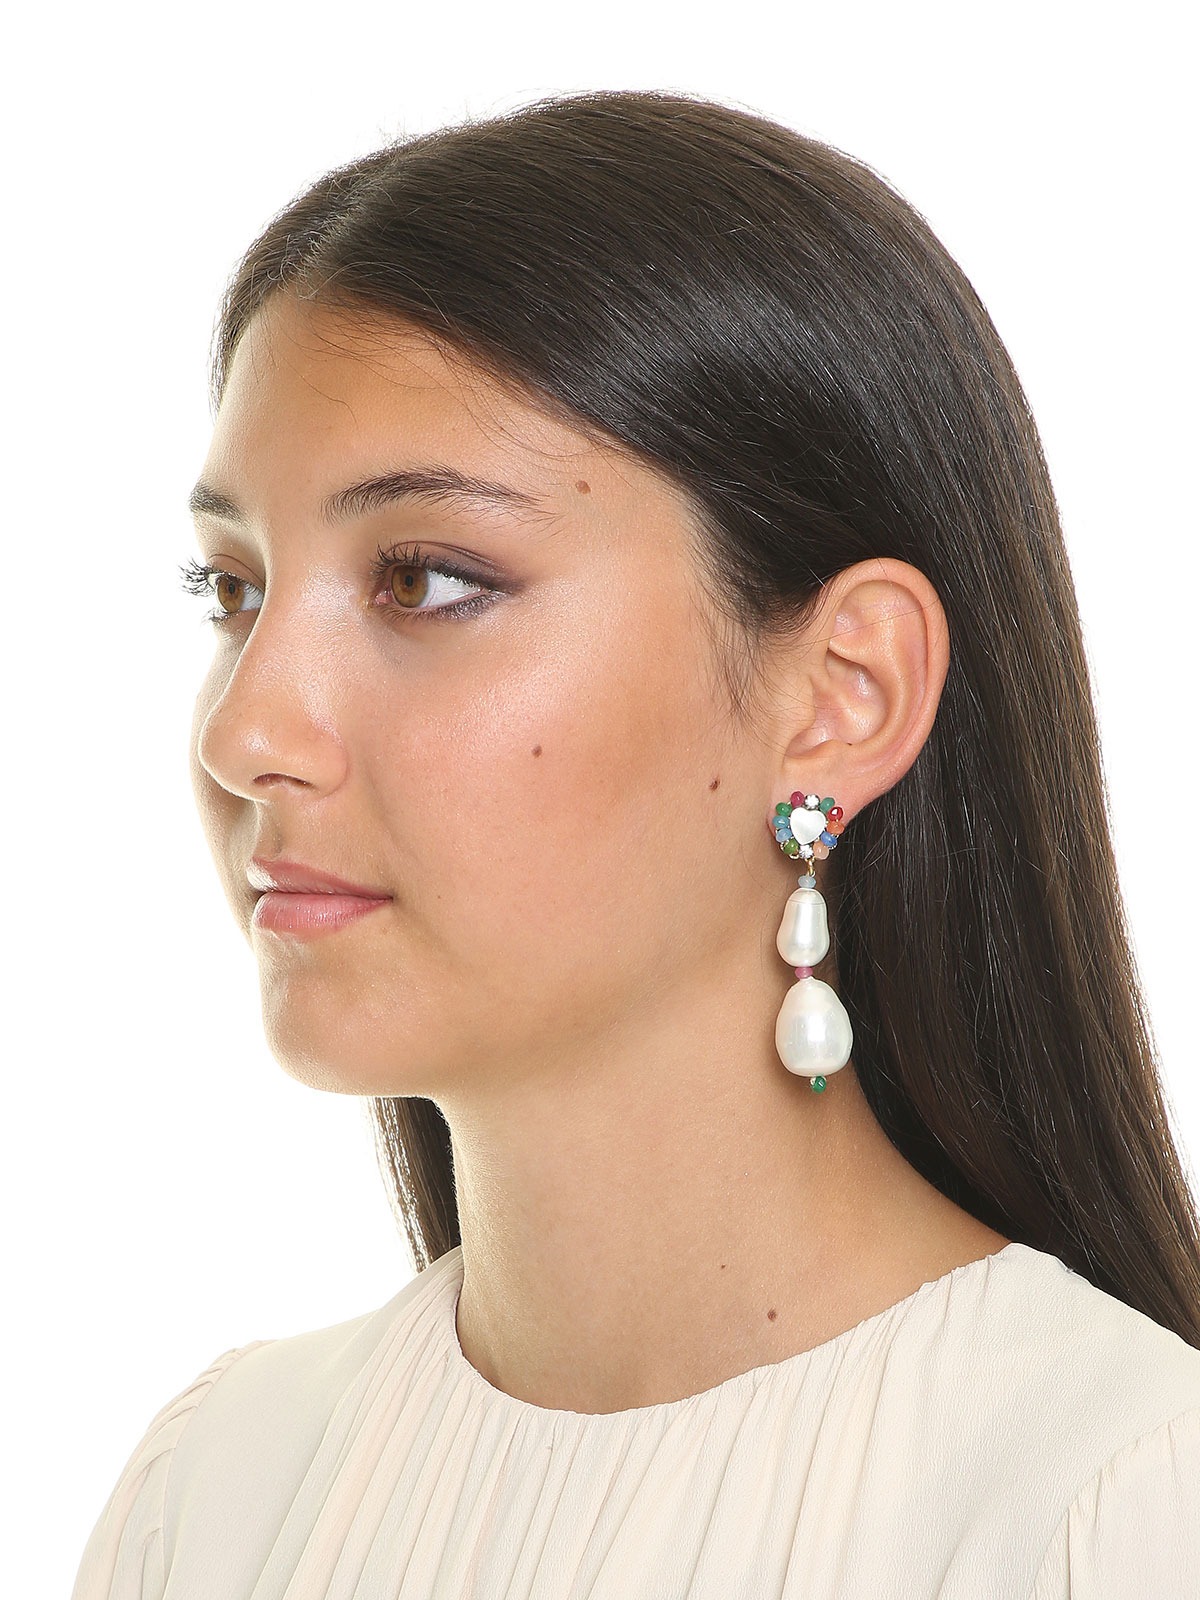 Jade earrings and motherofpearl heart stone